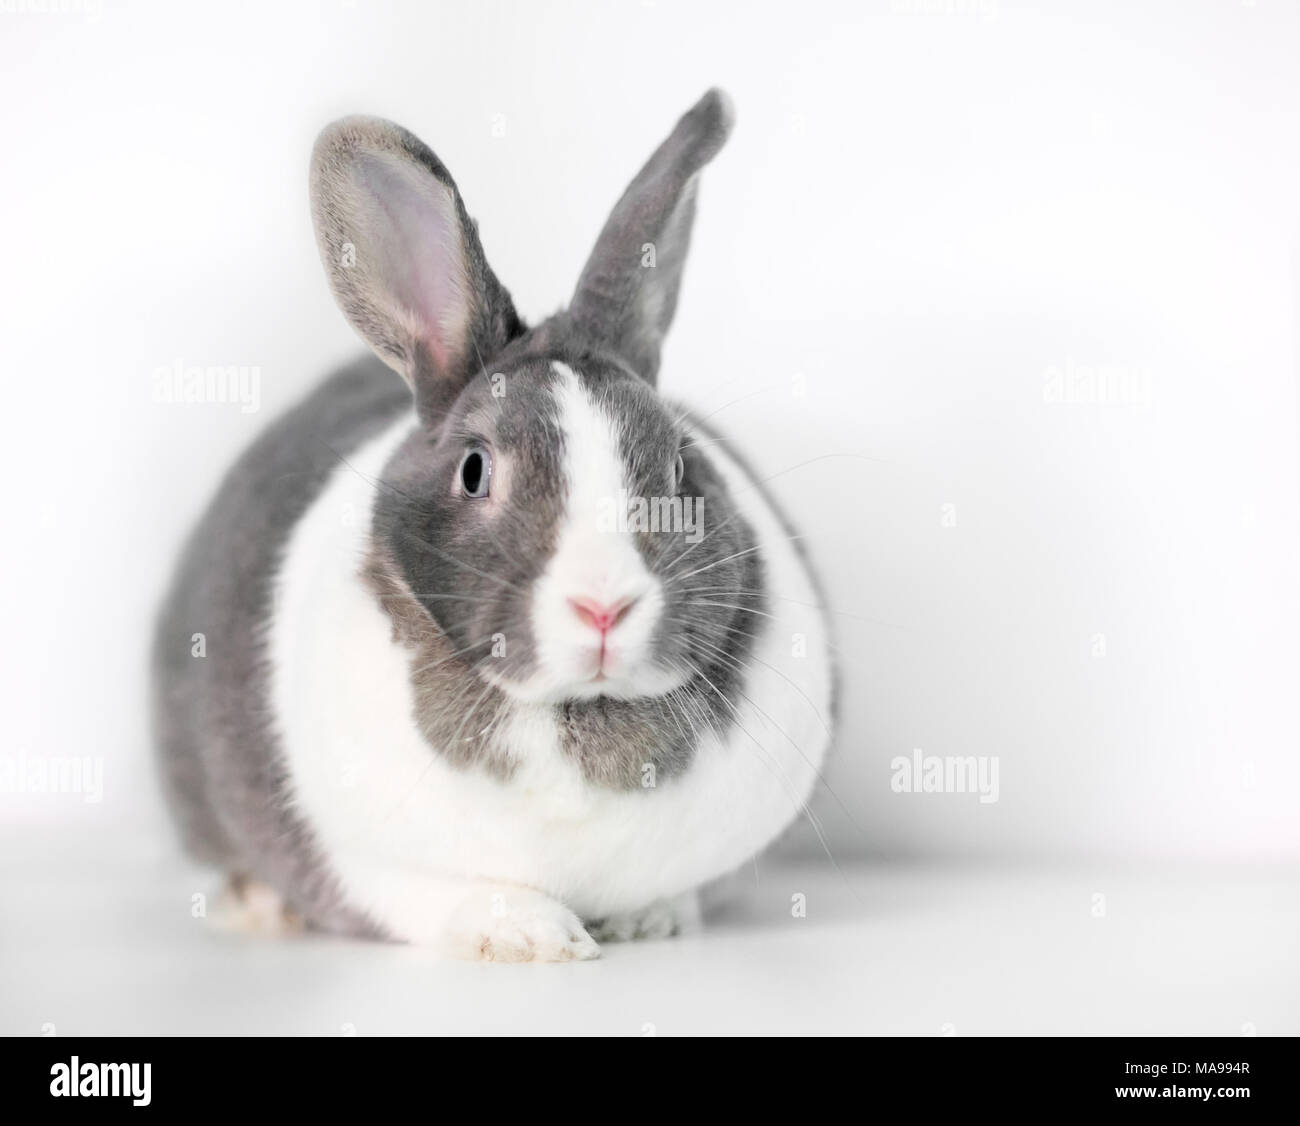 https://c8.alamy.com/comp/MA994R/a-female-gray-and-white-dutch-rabbit-with-a-large-dewlap-MA994R.jpg